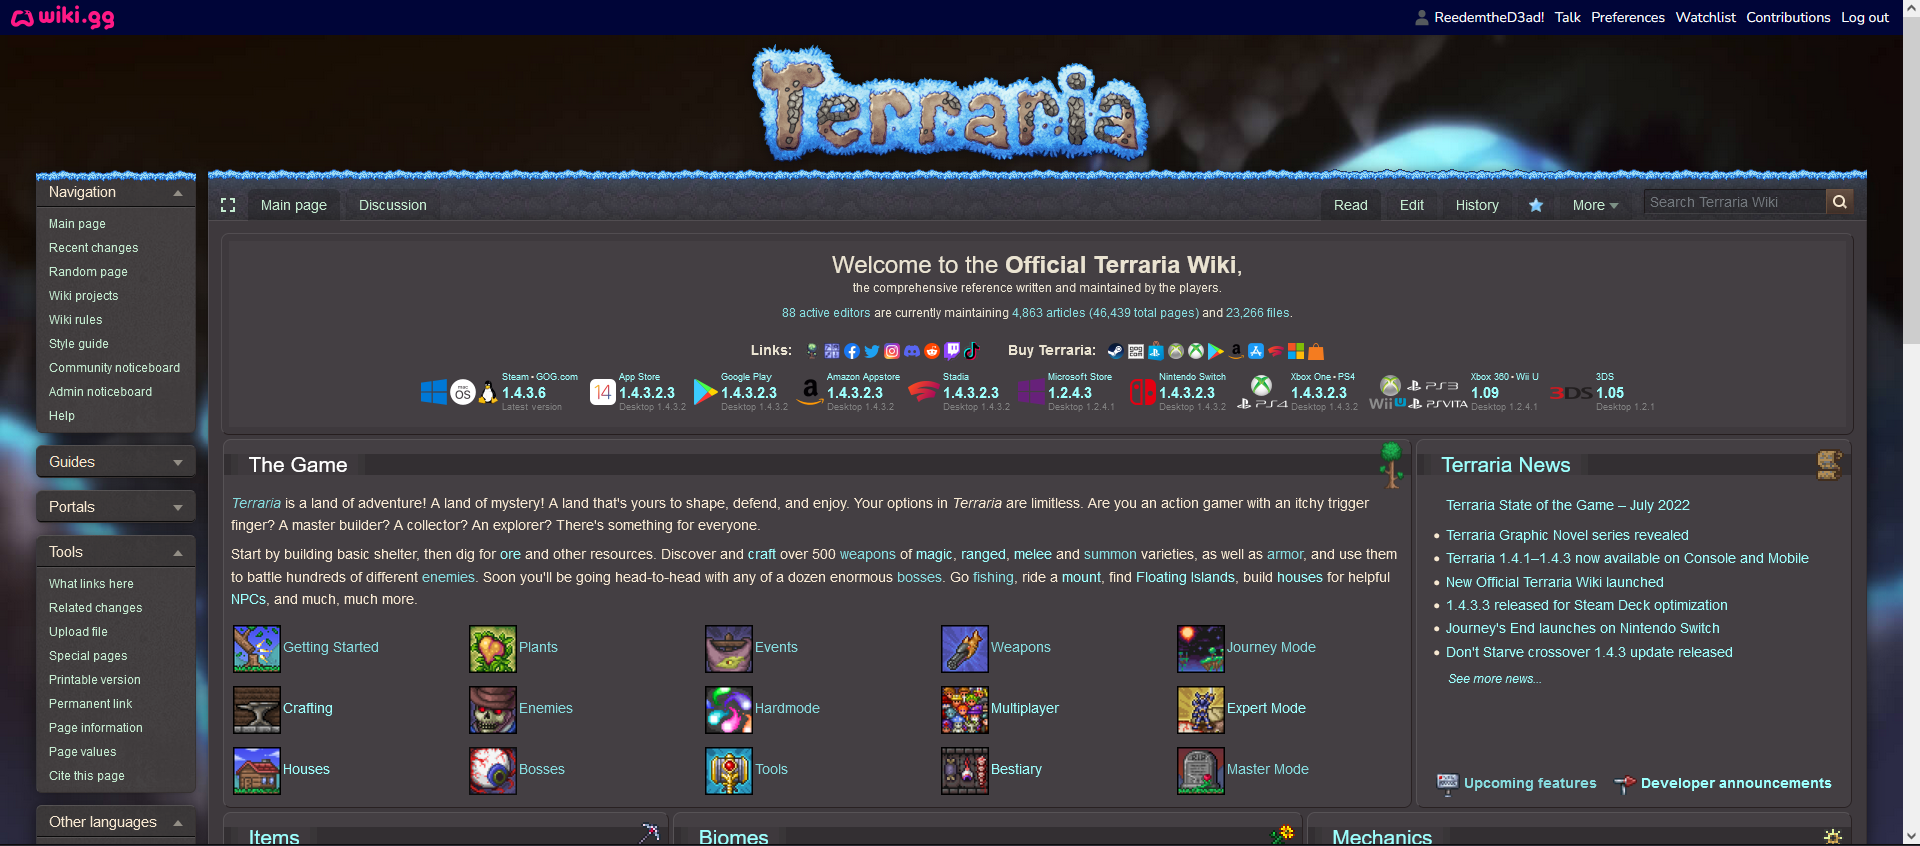 Talk:Gold Chest - Official Terraria Wiki